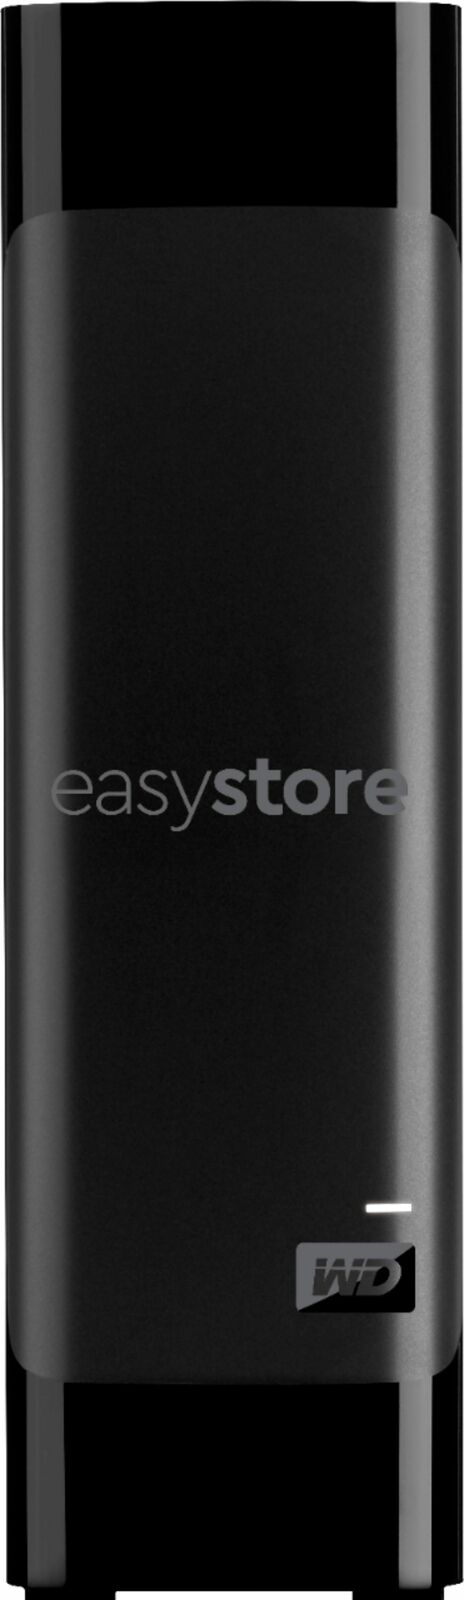 WD - easystore 8TB External USB 3.0 Hard Drive - Black $139.99